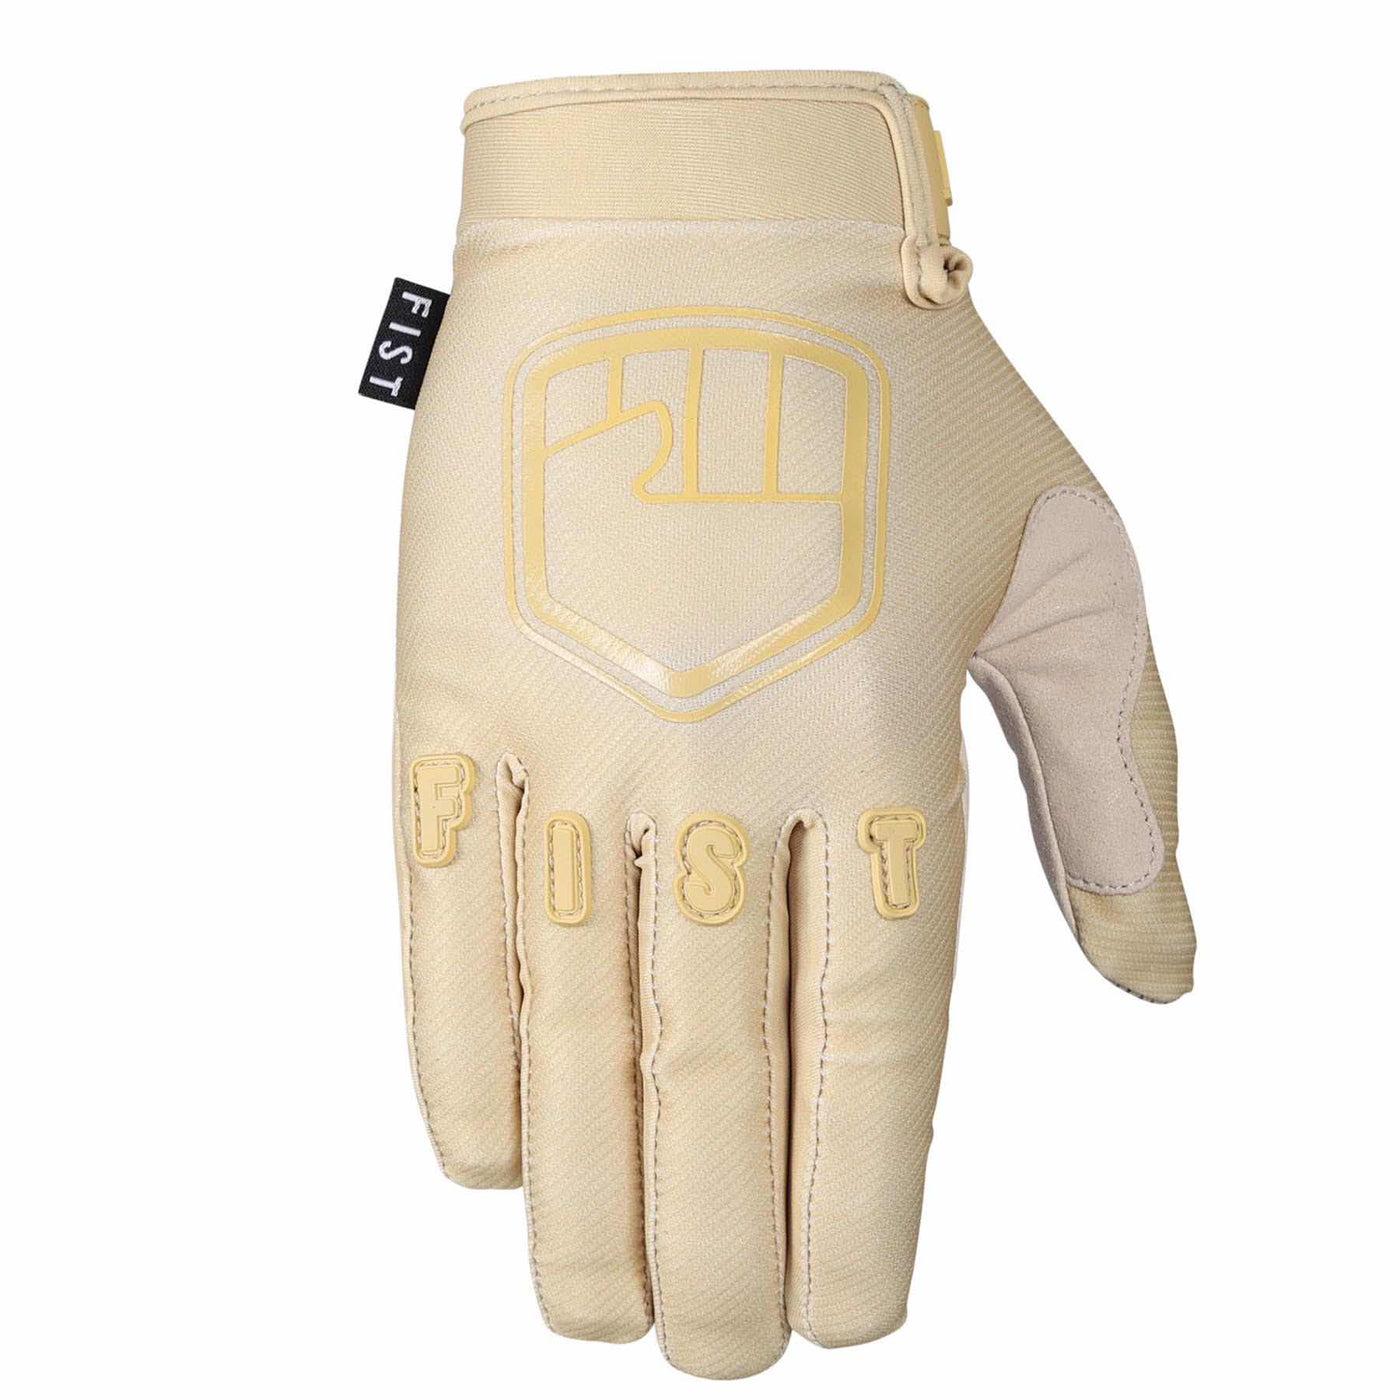 FIST Gloves Stocker - Khaki front | 8Lines.eu - Next day shipping, Best Offers